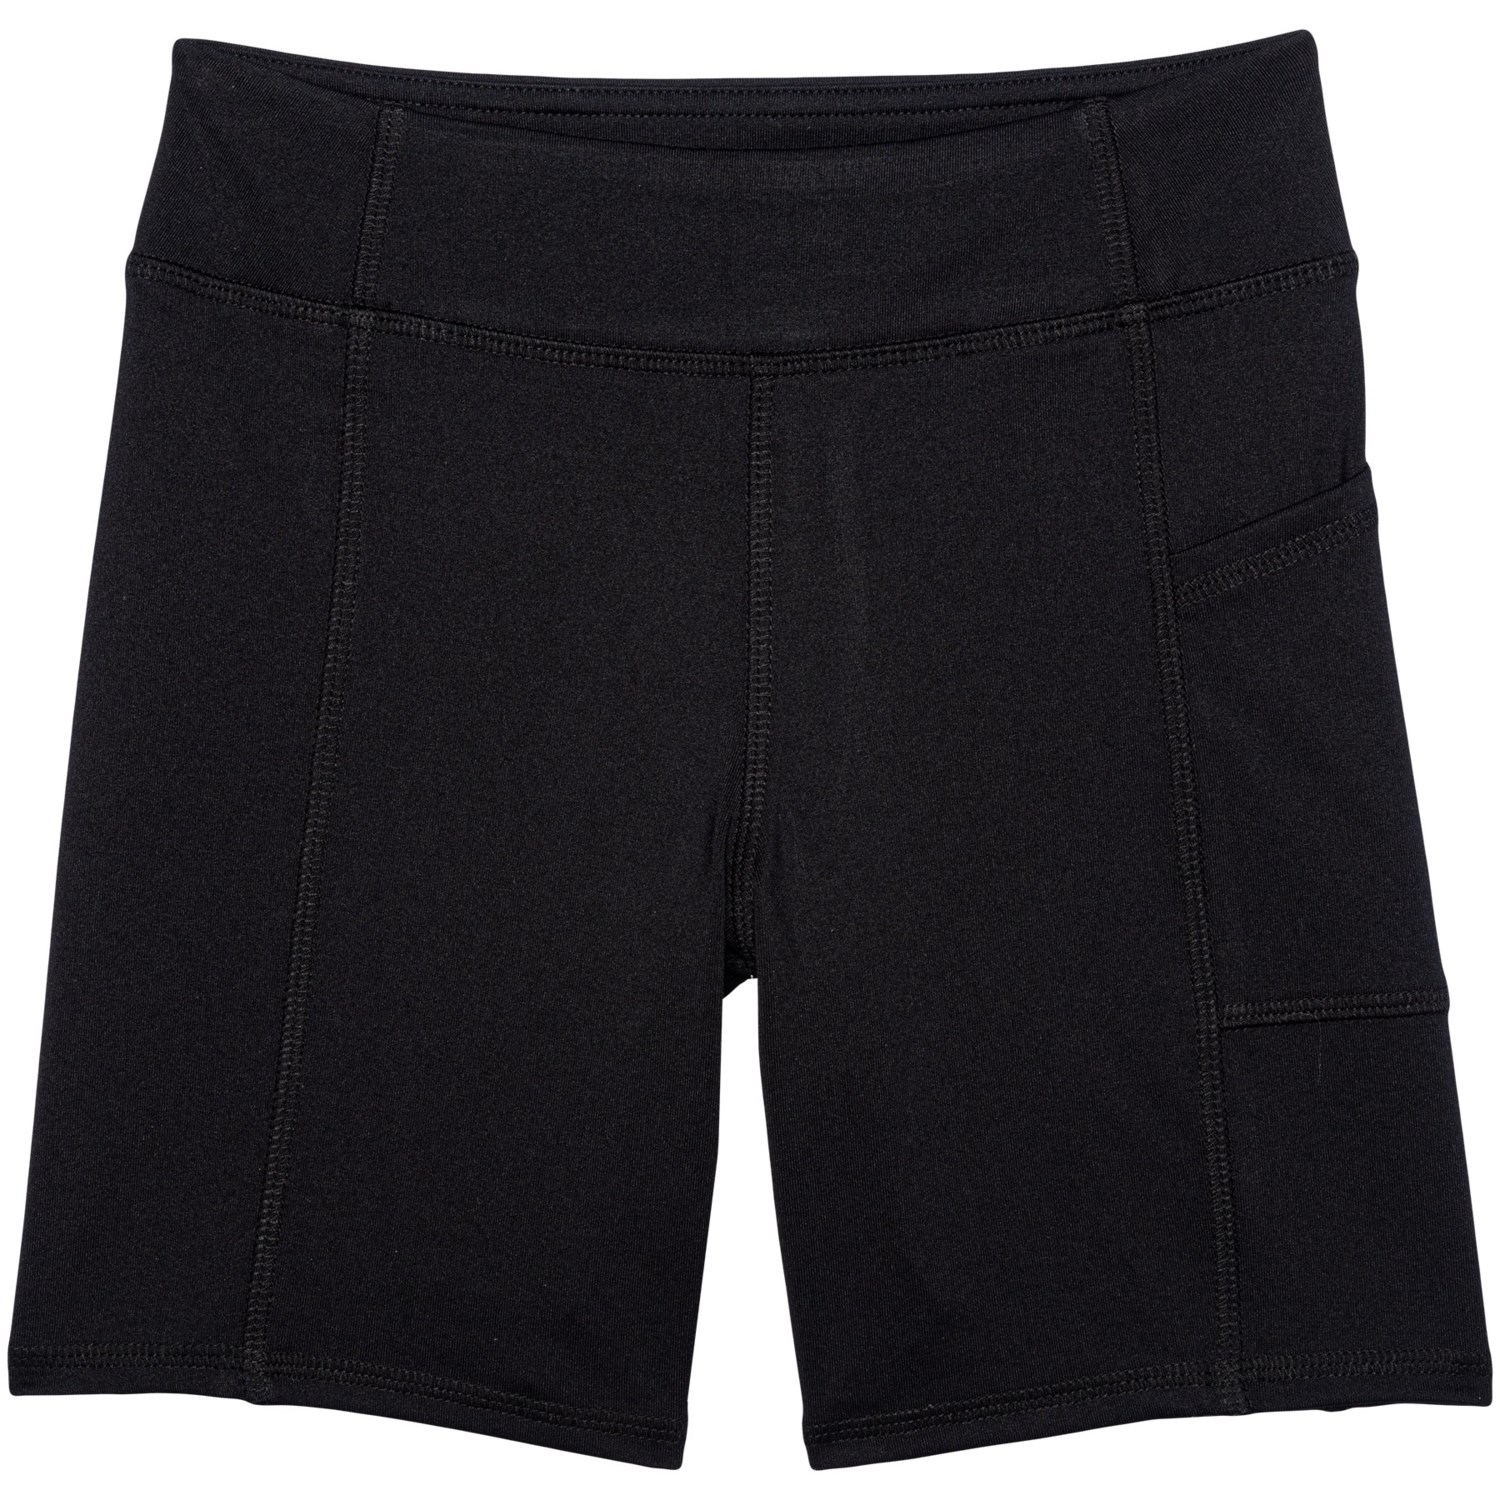 Kyodan Bike Shorts with Side Pocket 